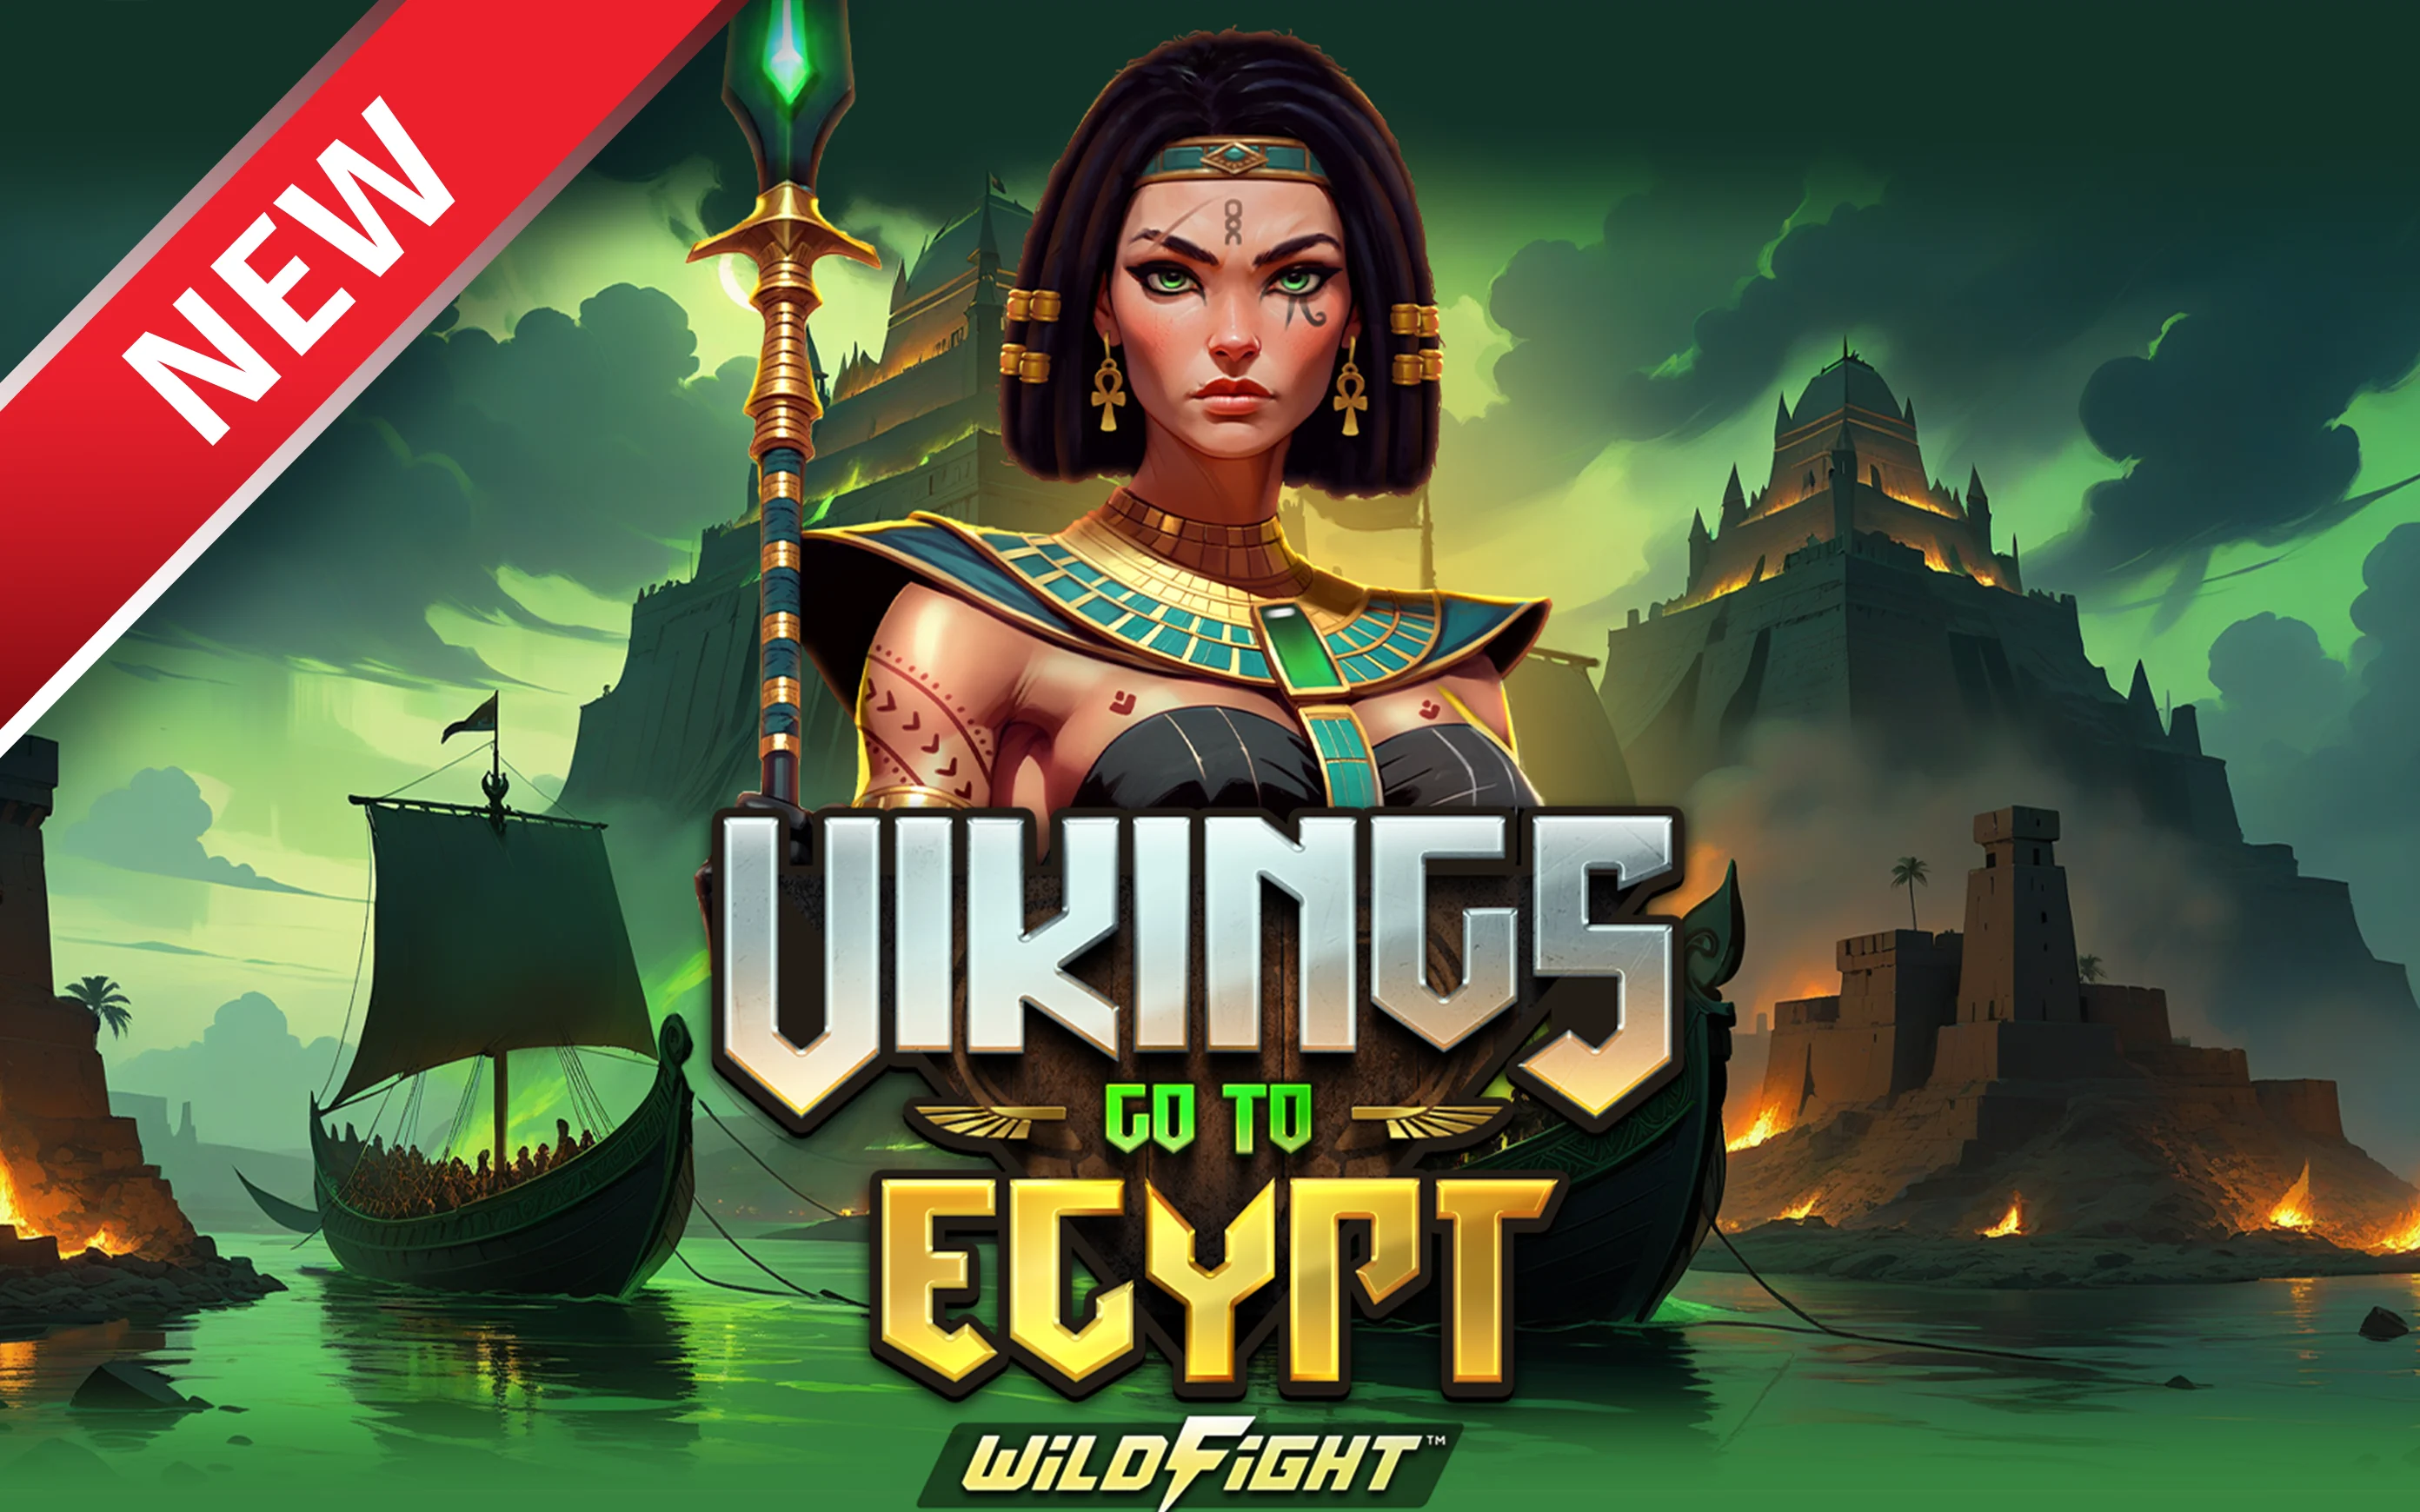 Speel Vikings Go To Egypt Wild Fight!™ op Starcasino.be online casino